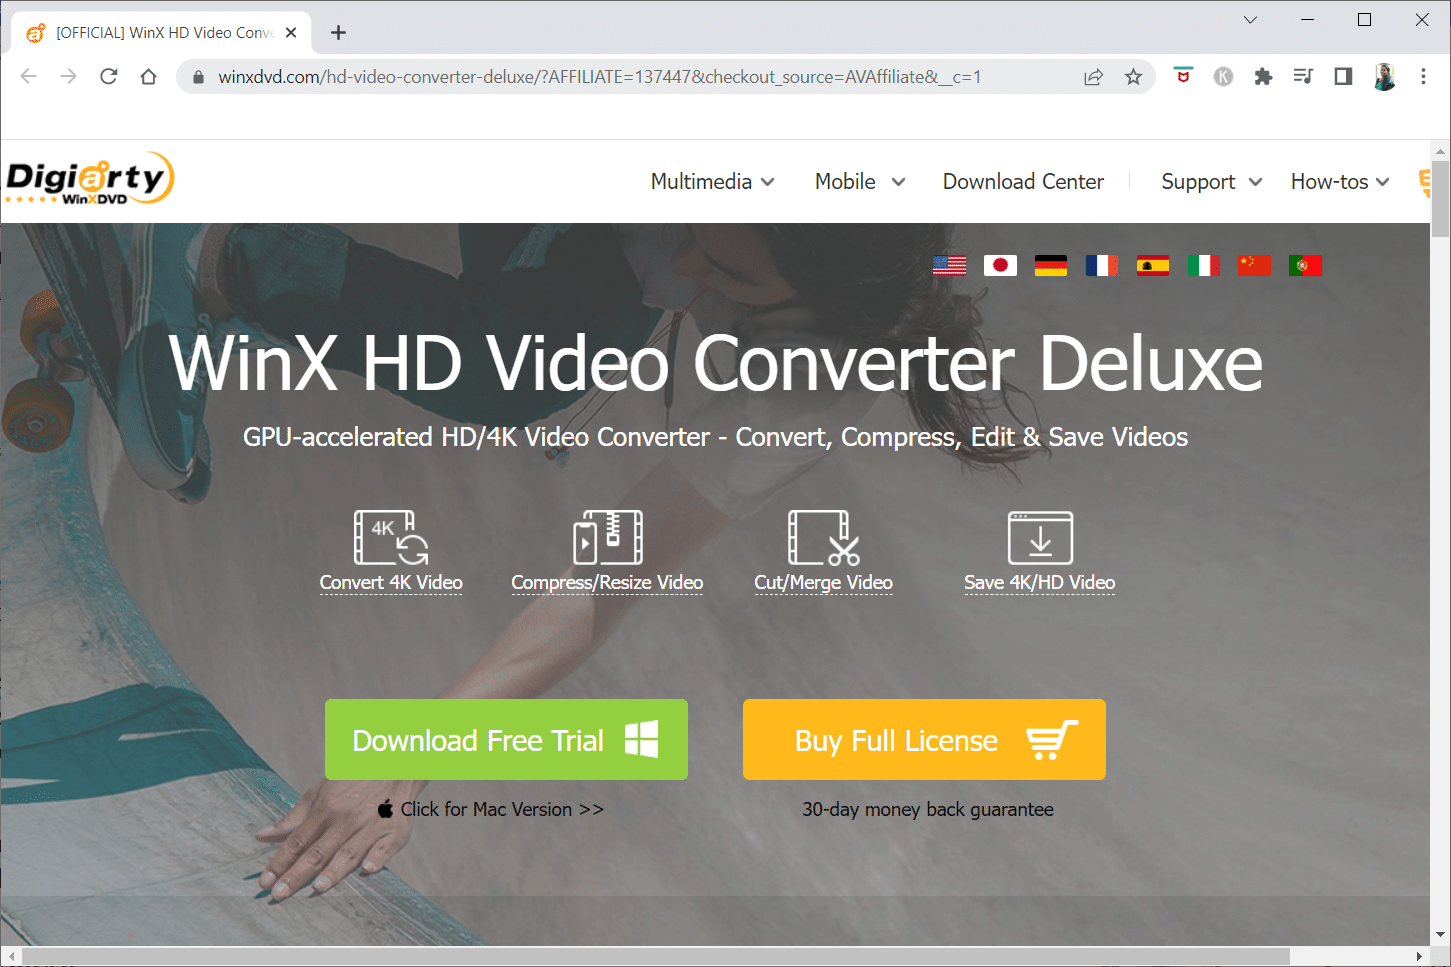 WinX YouTube Downloader. free online video downloaders